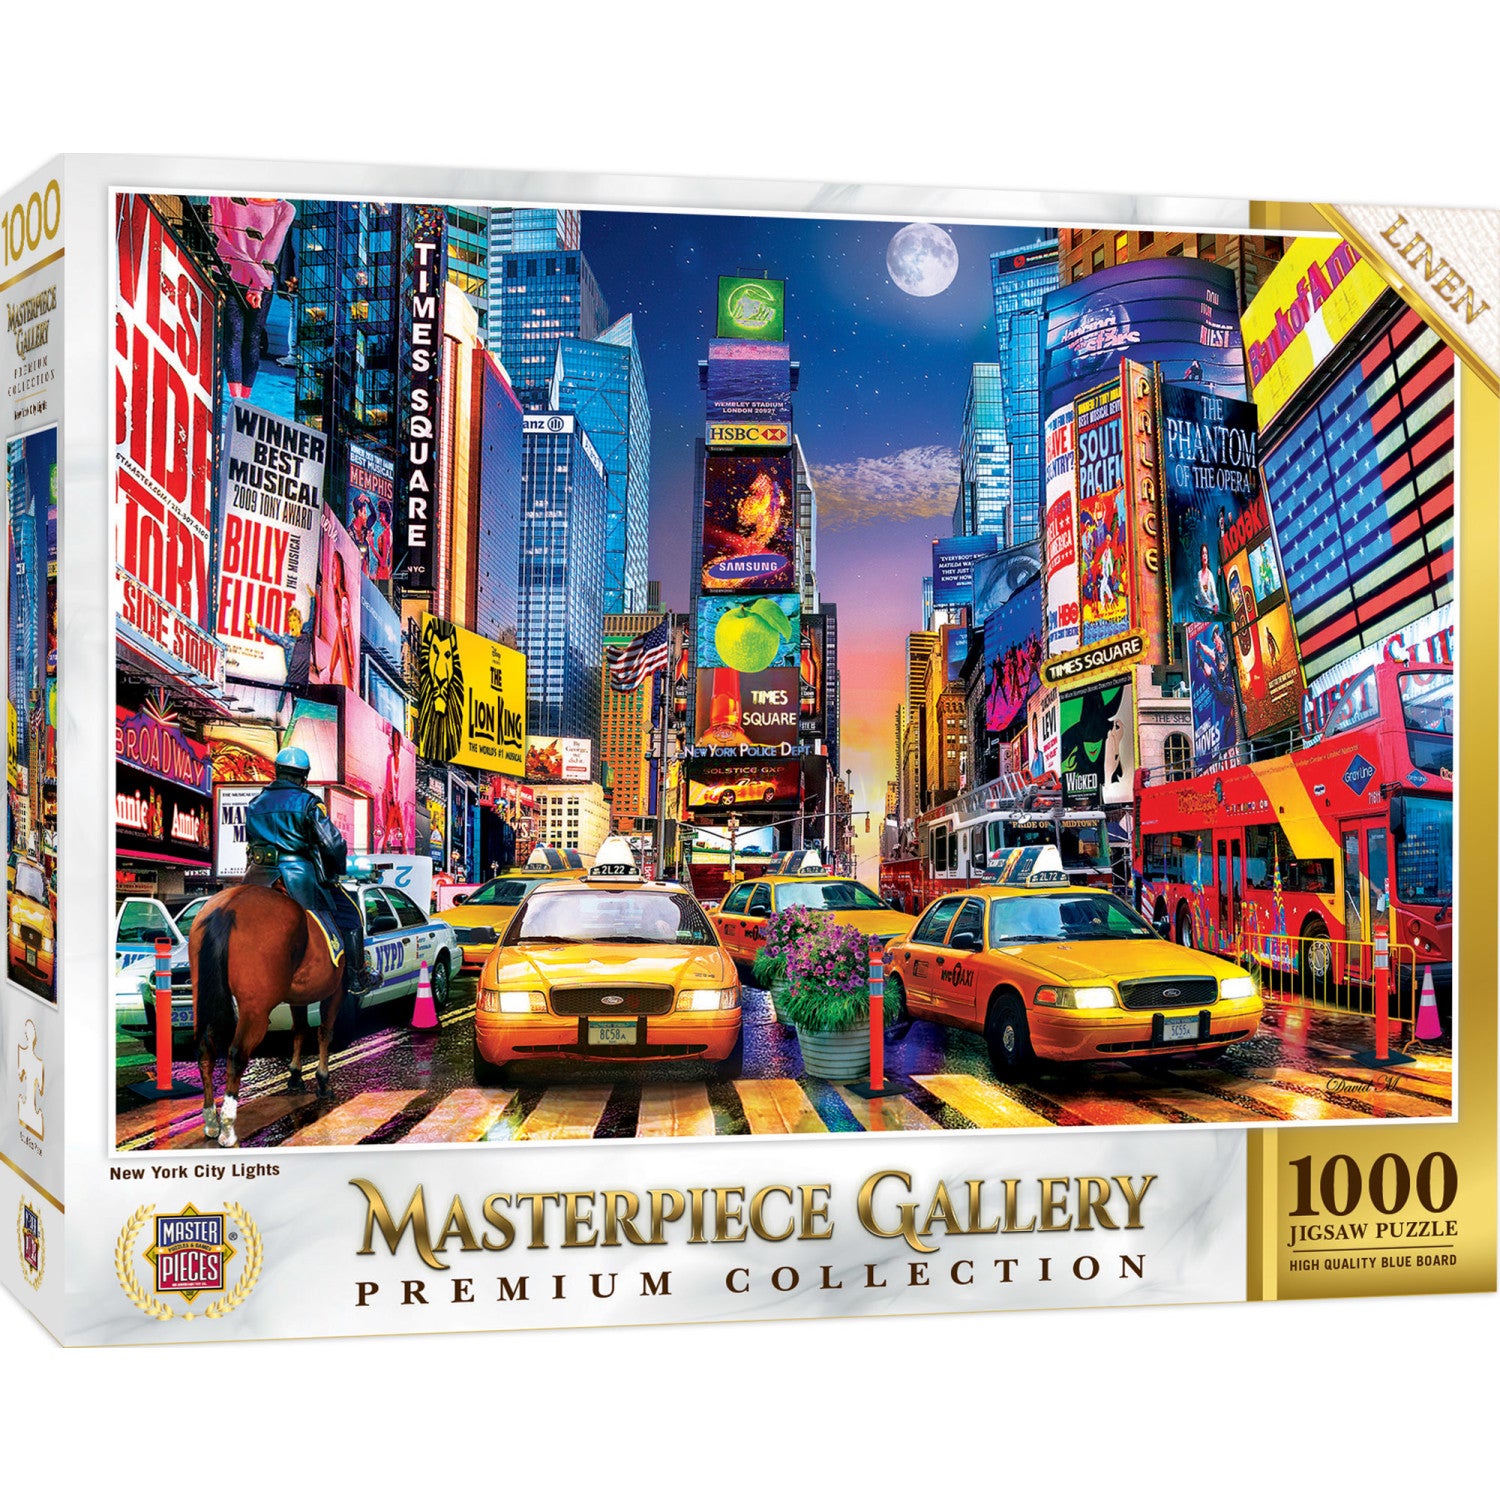 Masterpiece Gallery - New York City Lights 1000 Piece Jigsaw Puzzle